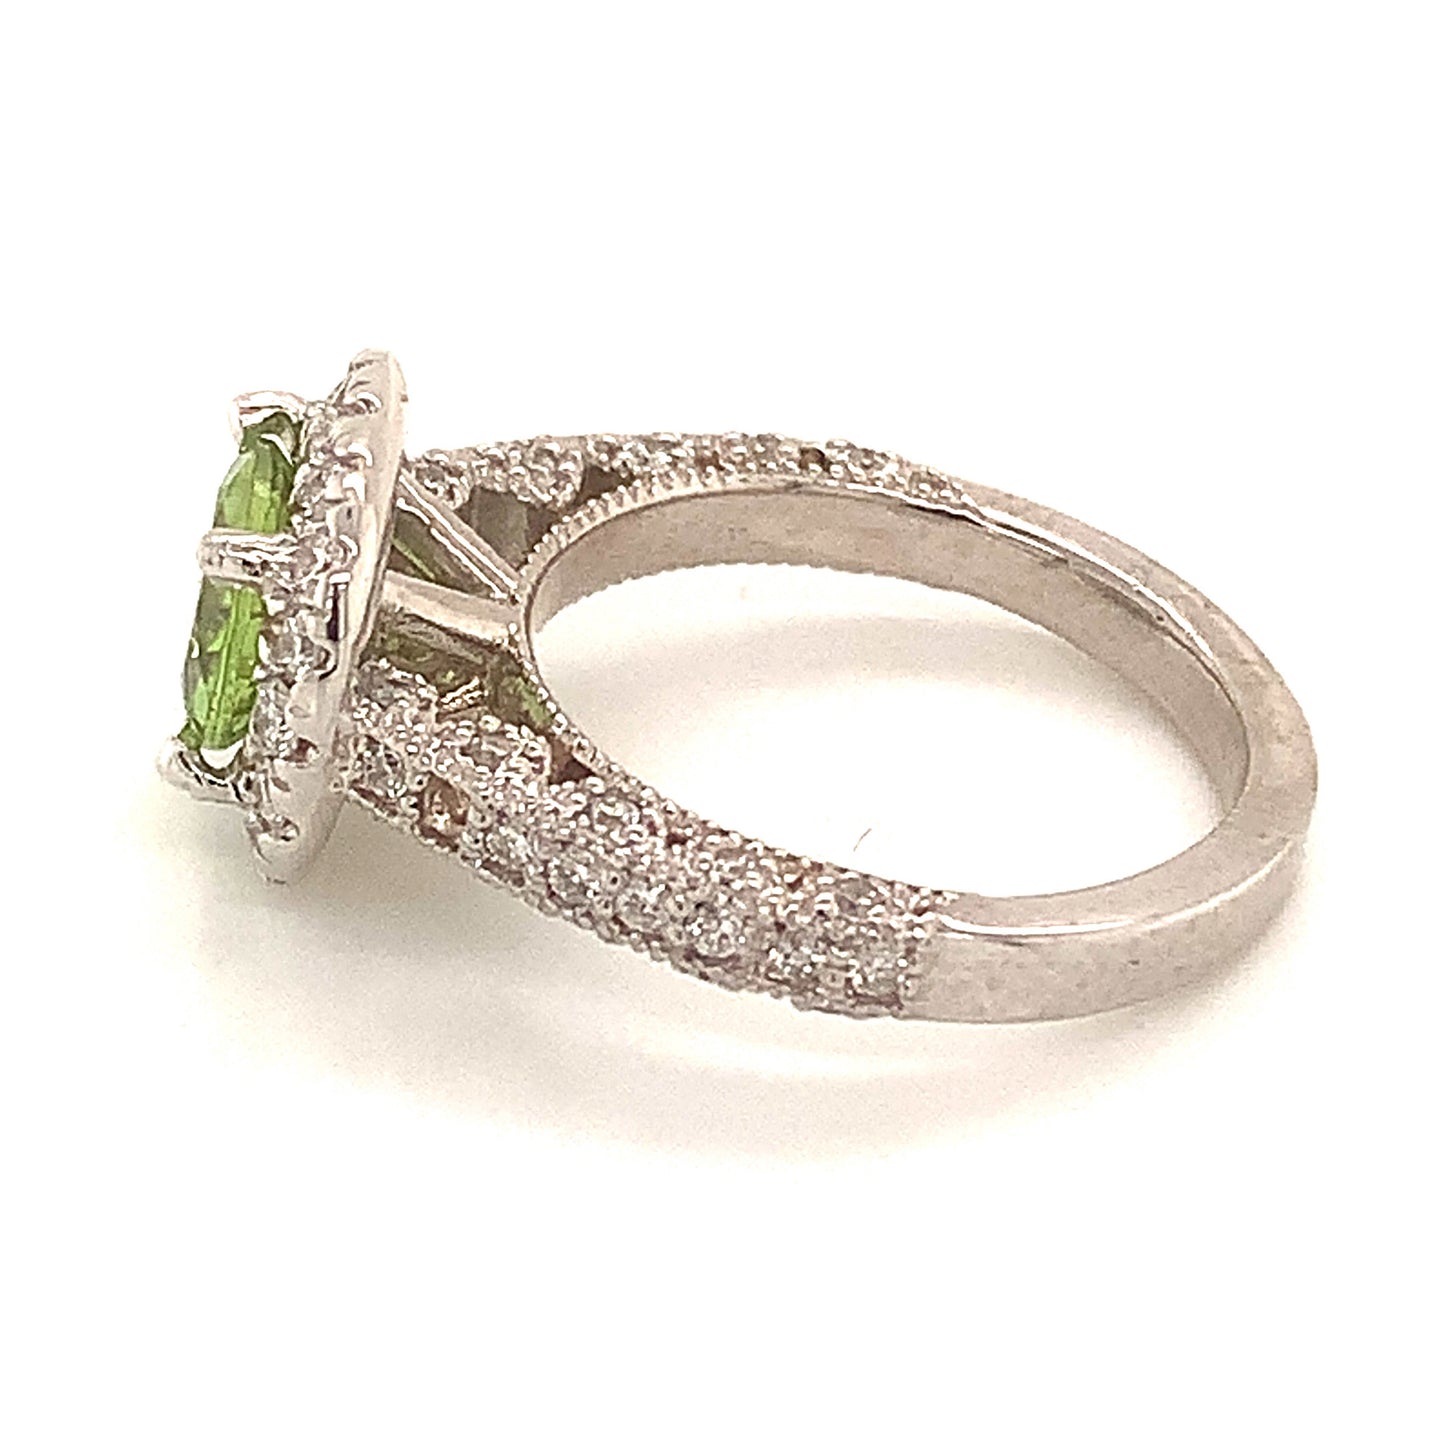 Peridot Diamond Ring 14k Gold Size 5.5 1.85 TCW Certified $4,950 121081 - Certified Estate Jewelry